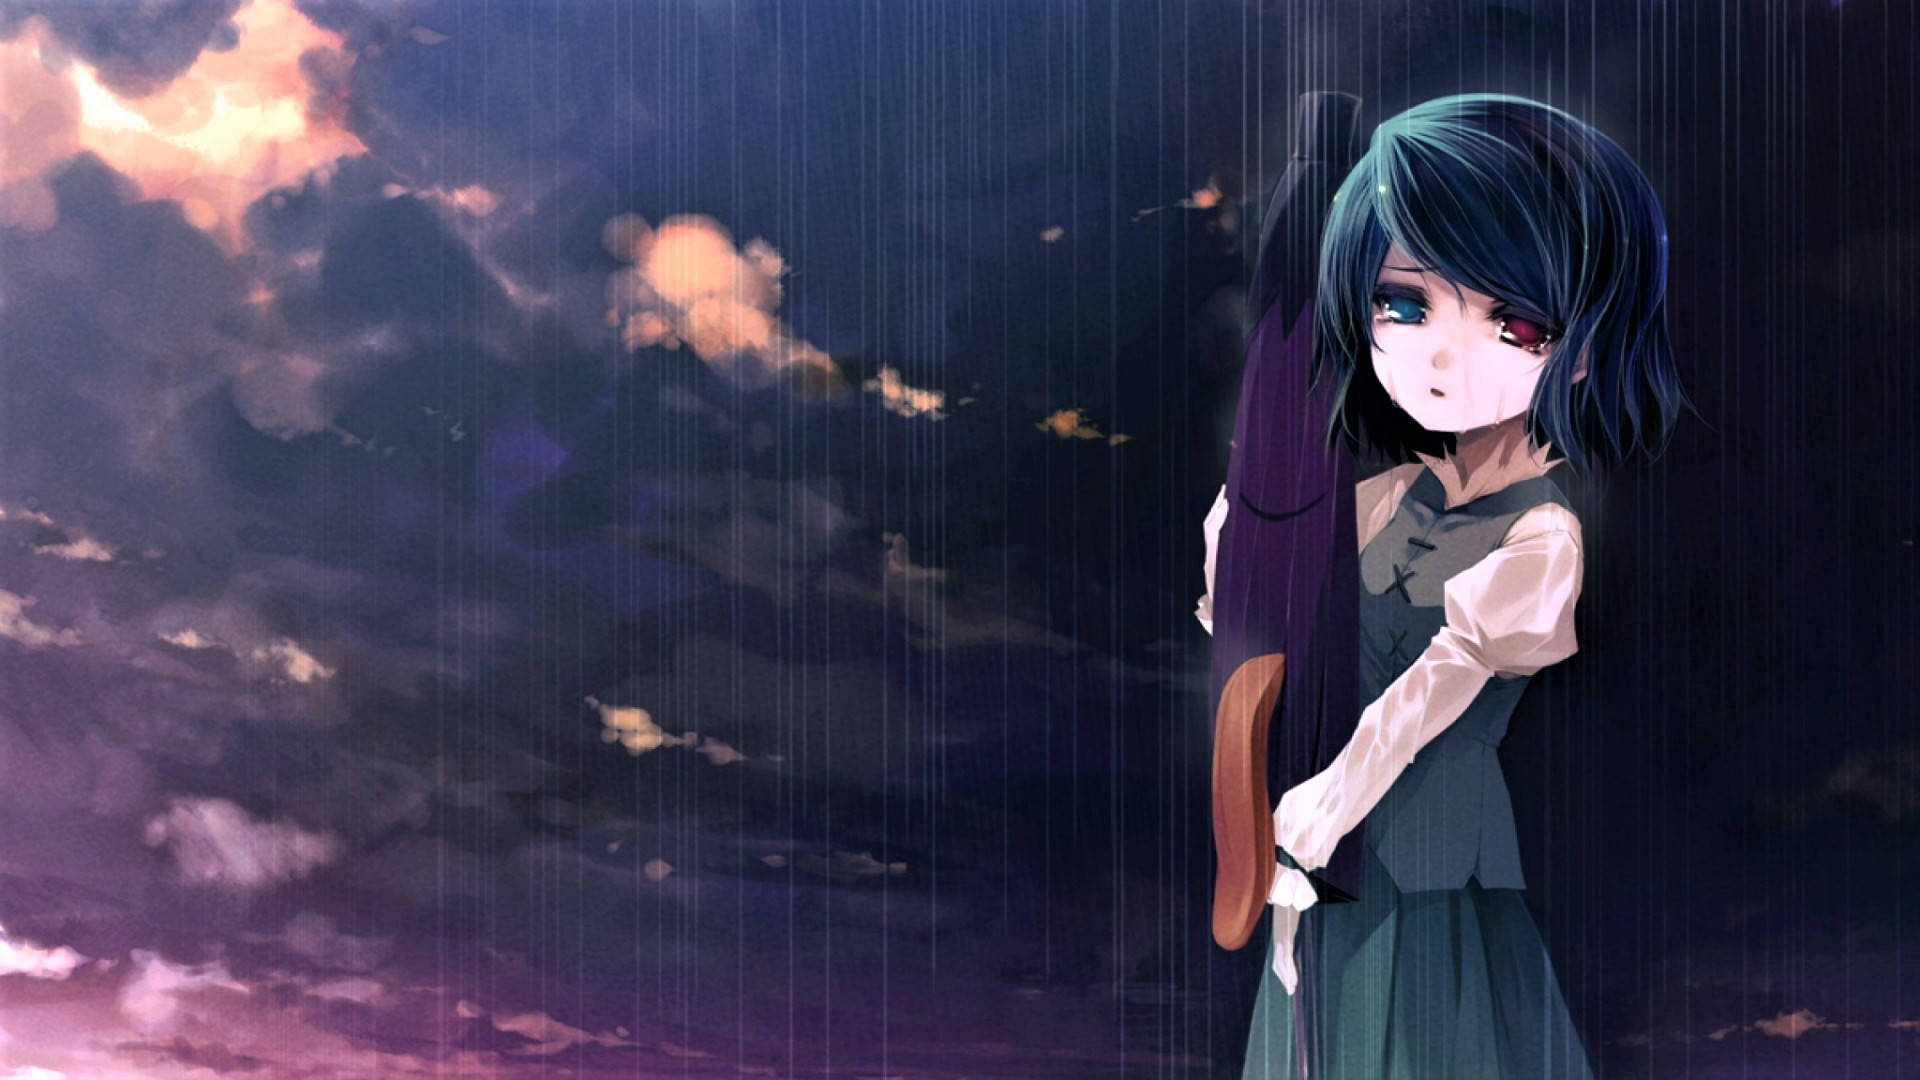 Sad Anime Girl With Heterochromia Background